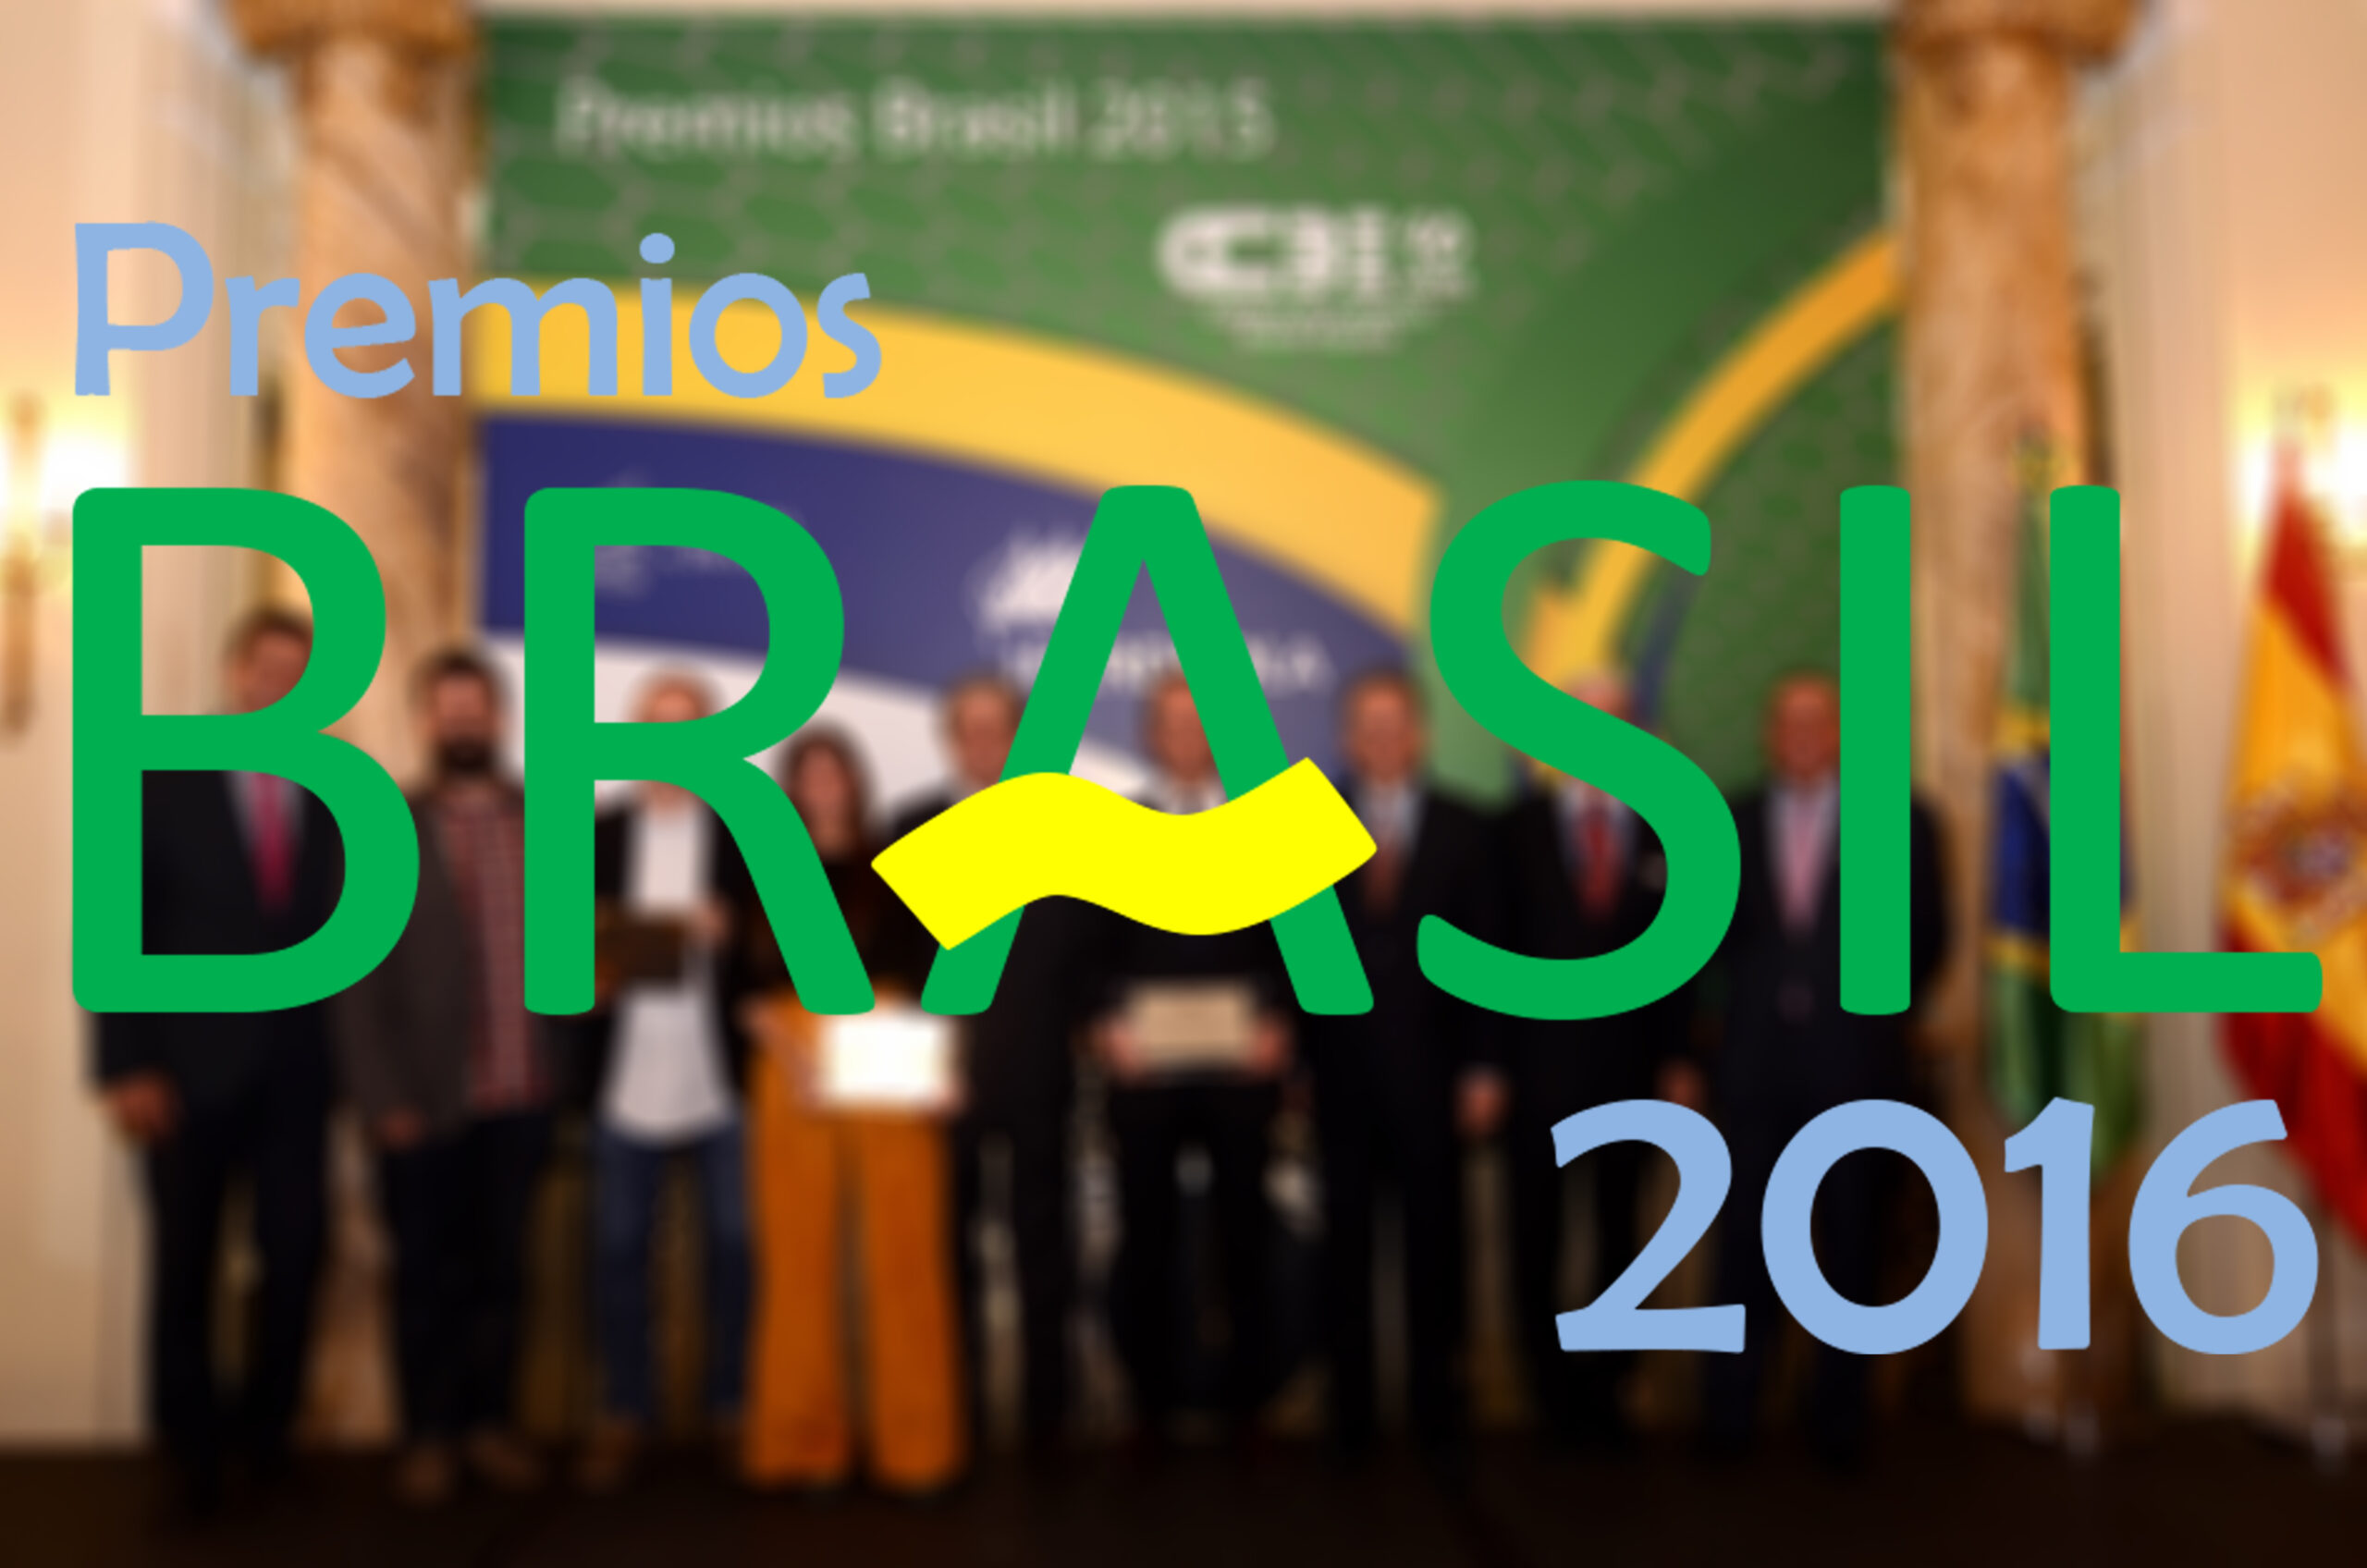 Próxima edición Premios Brasil 2016